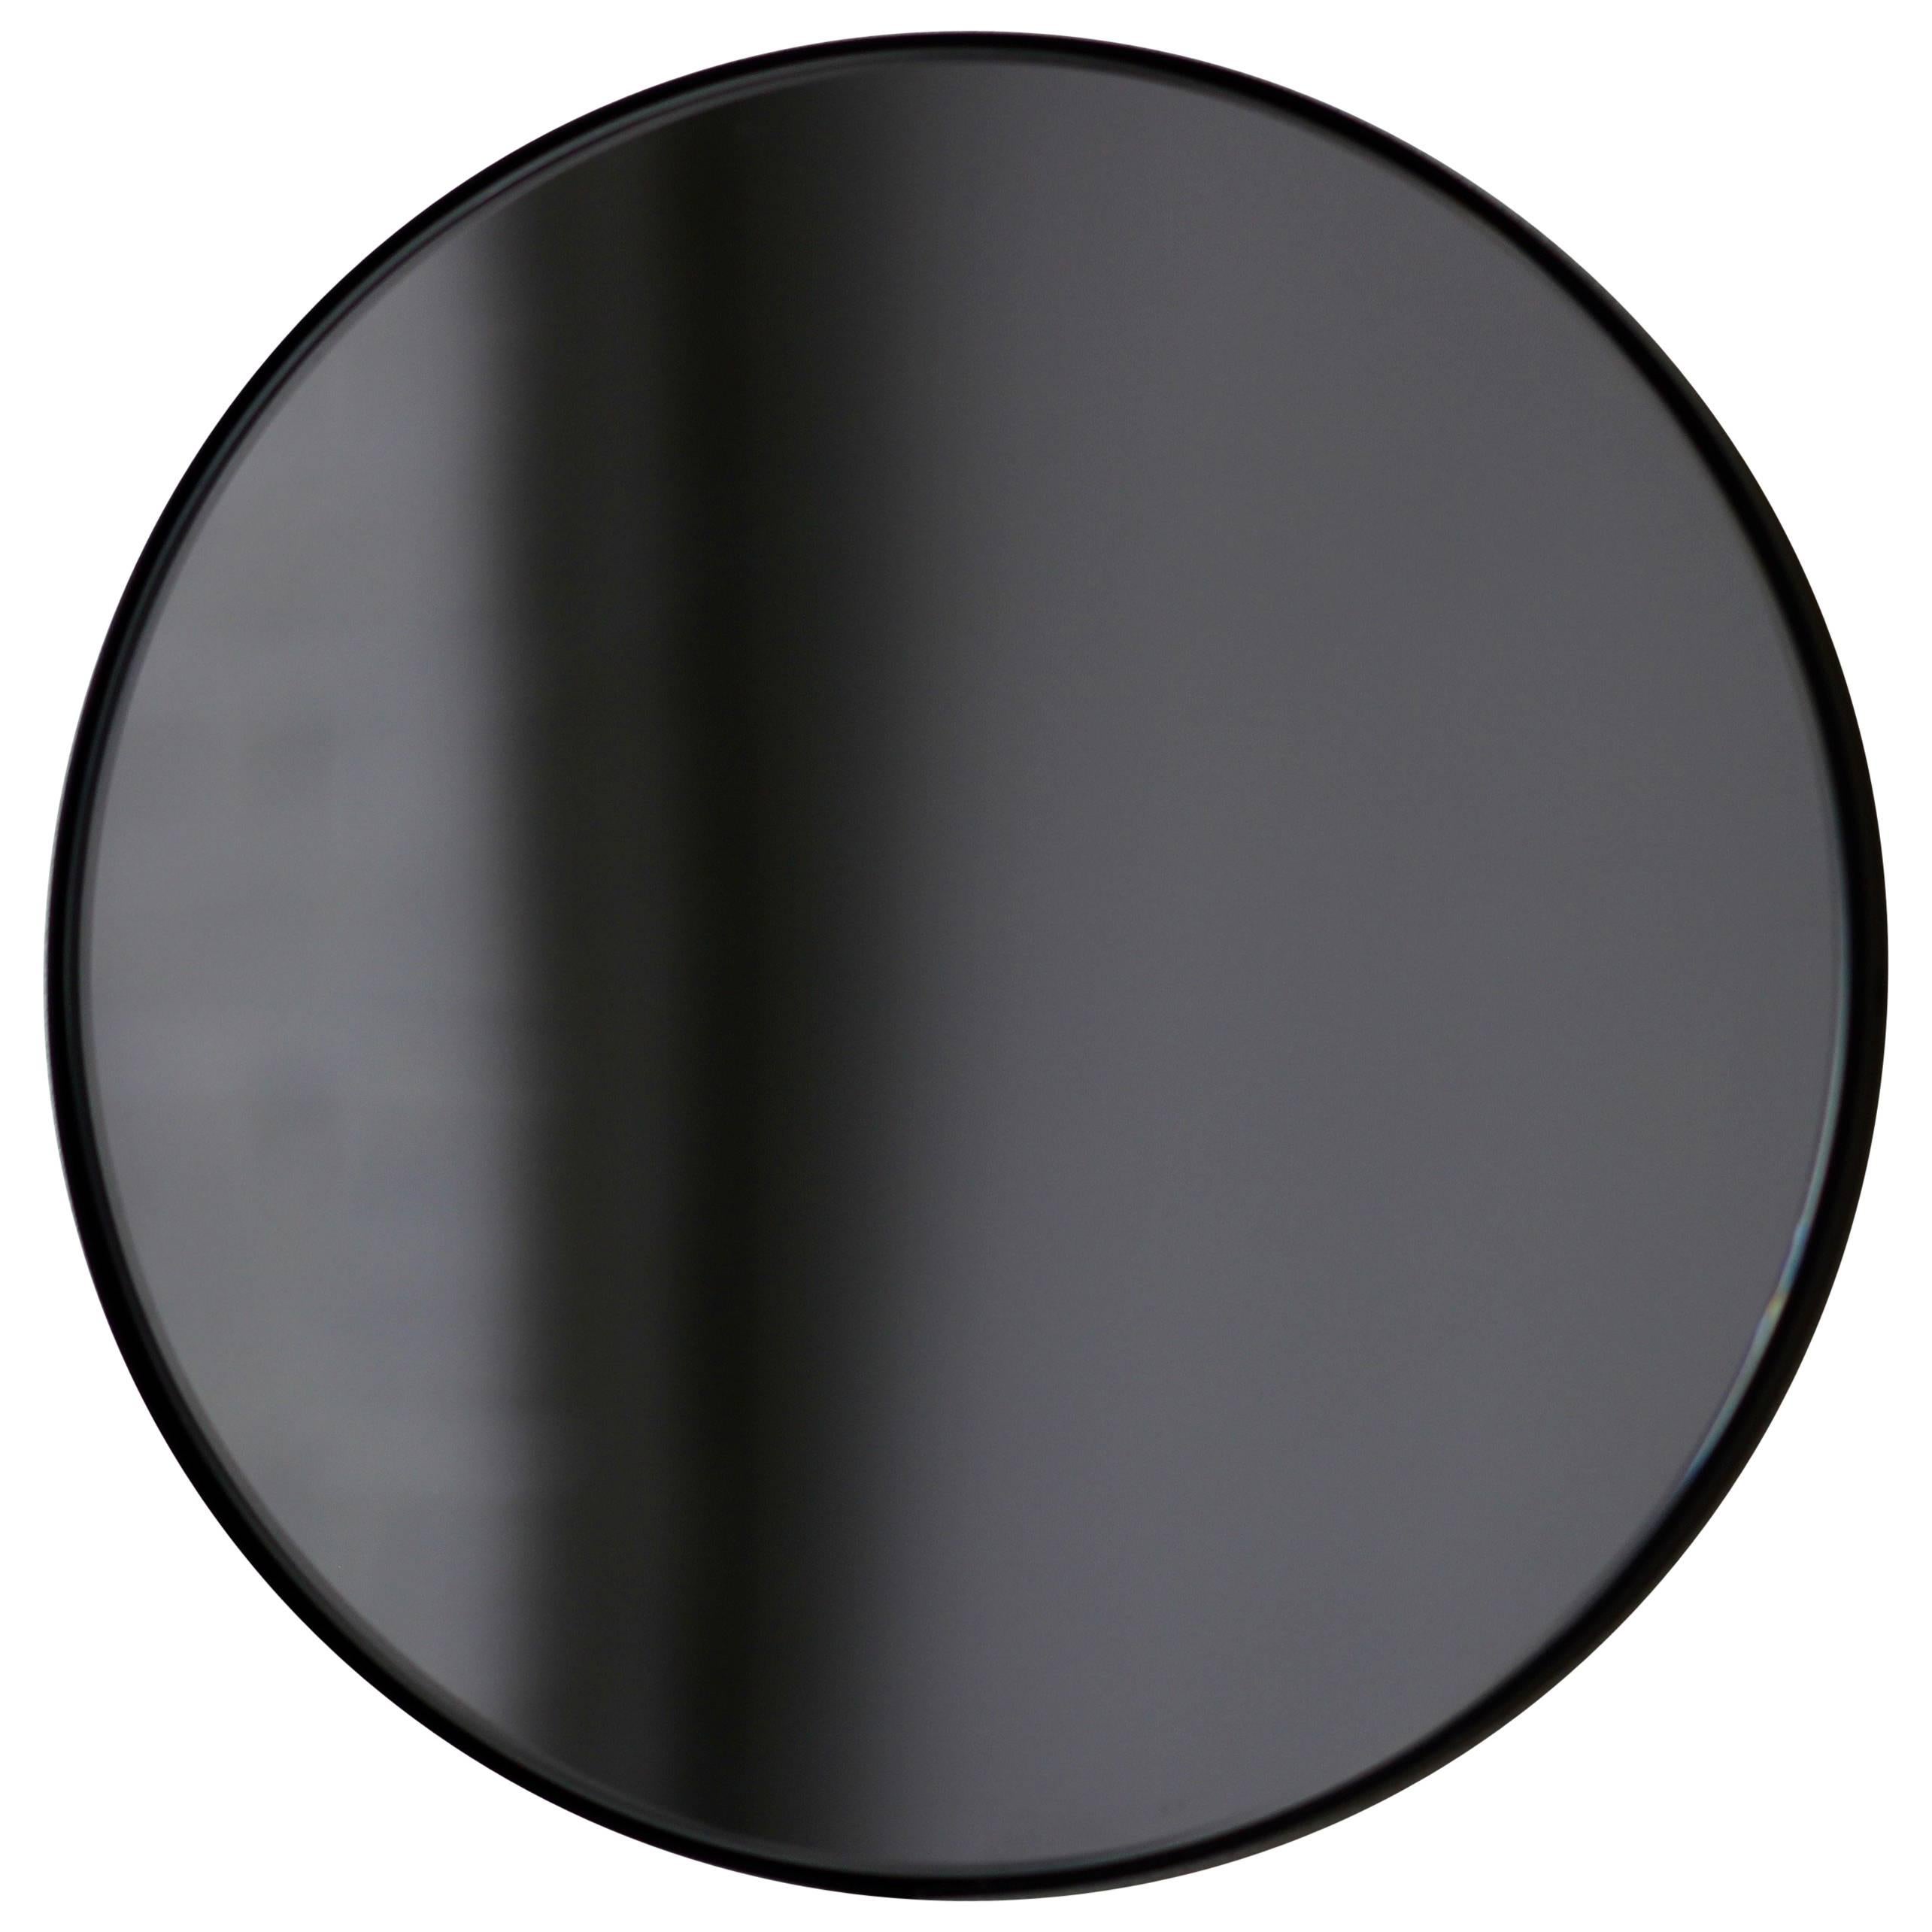 Orbis Black Tinted Art Deco Round Mirror with Black Frame, Medium (miroir rond teinté art déco avec cadre noir)